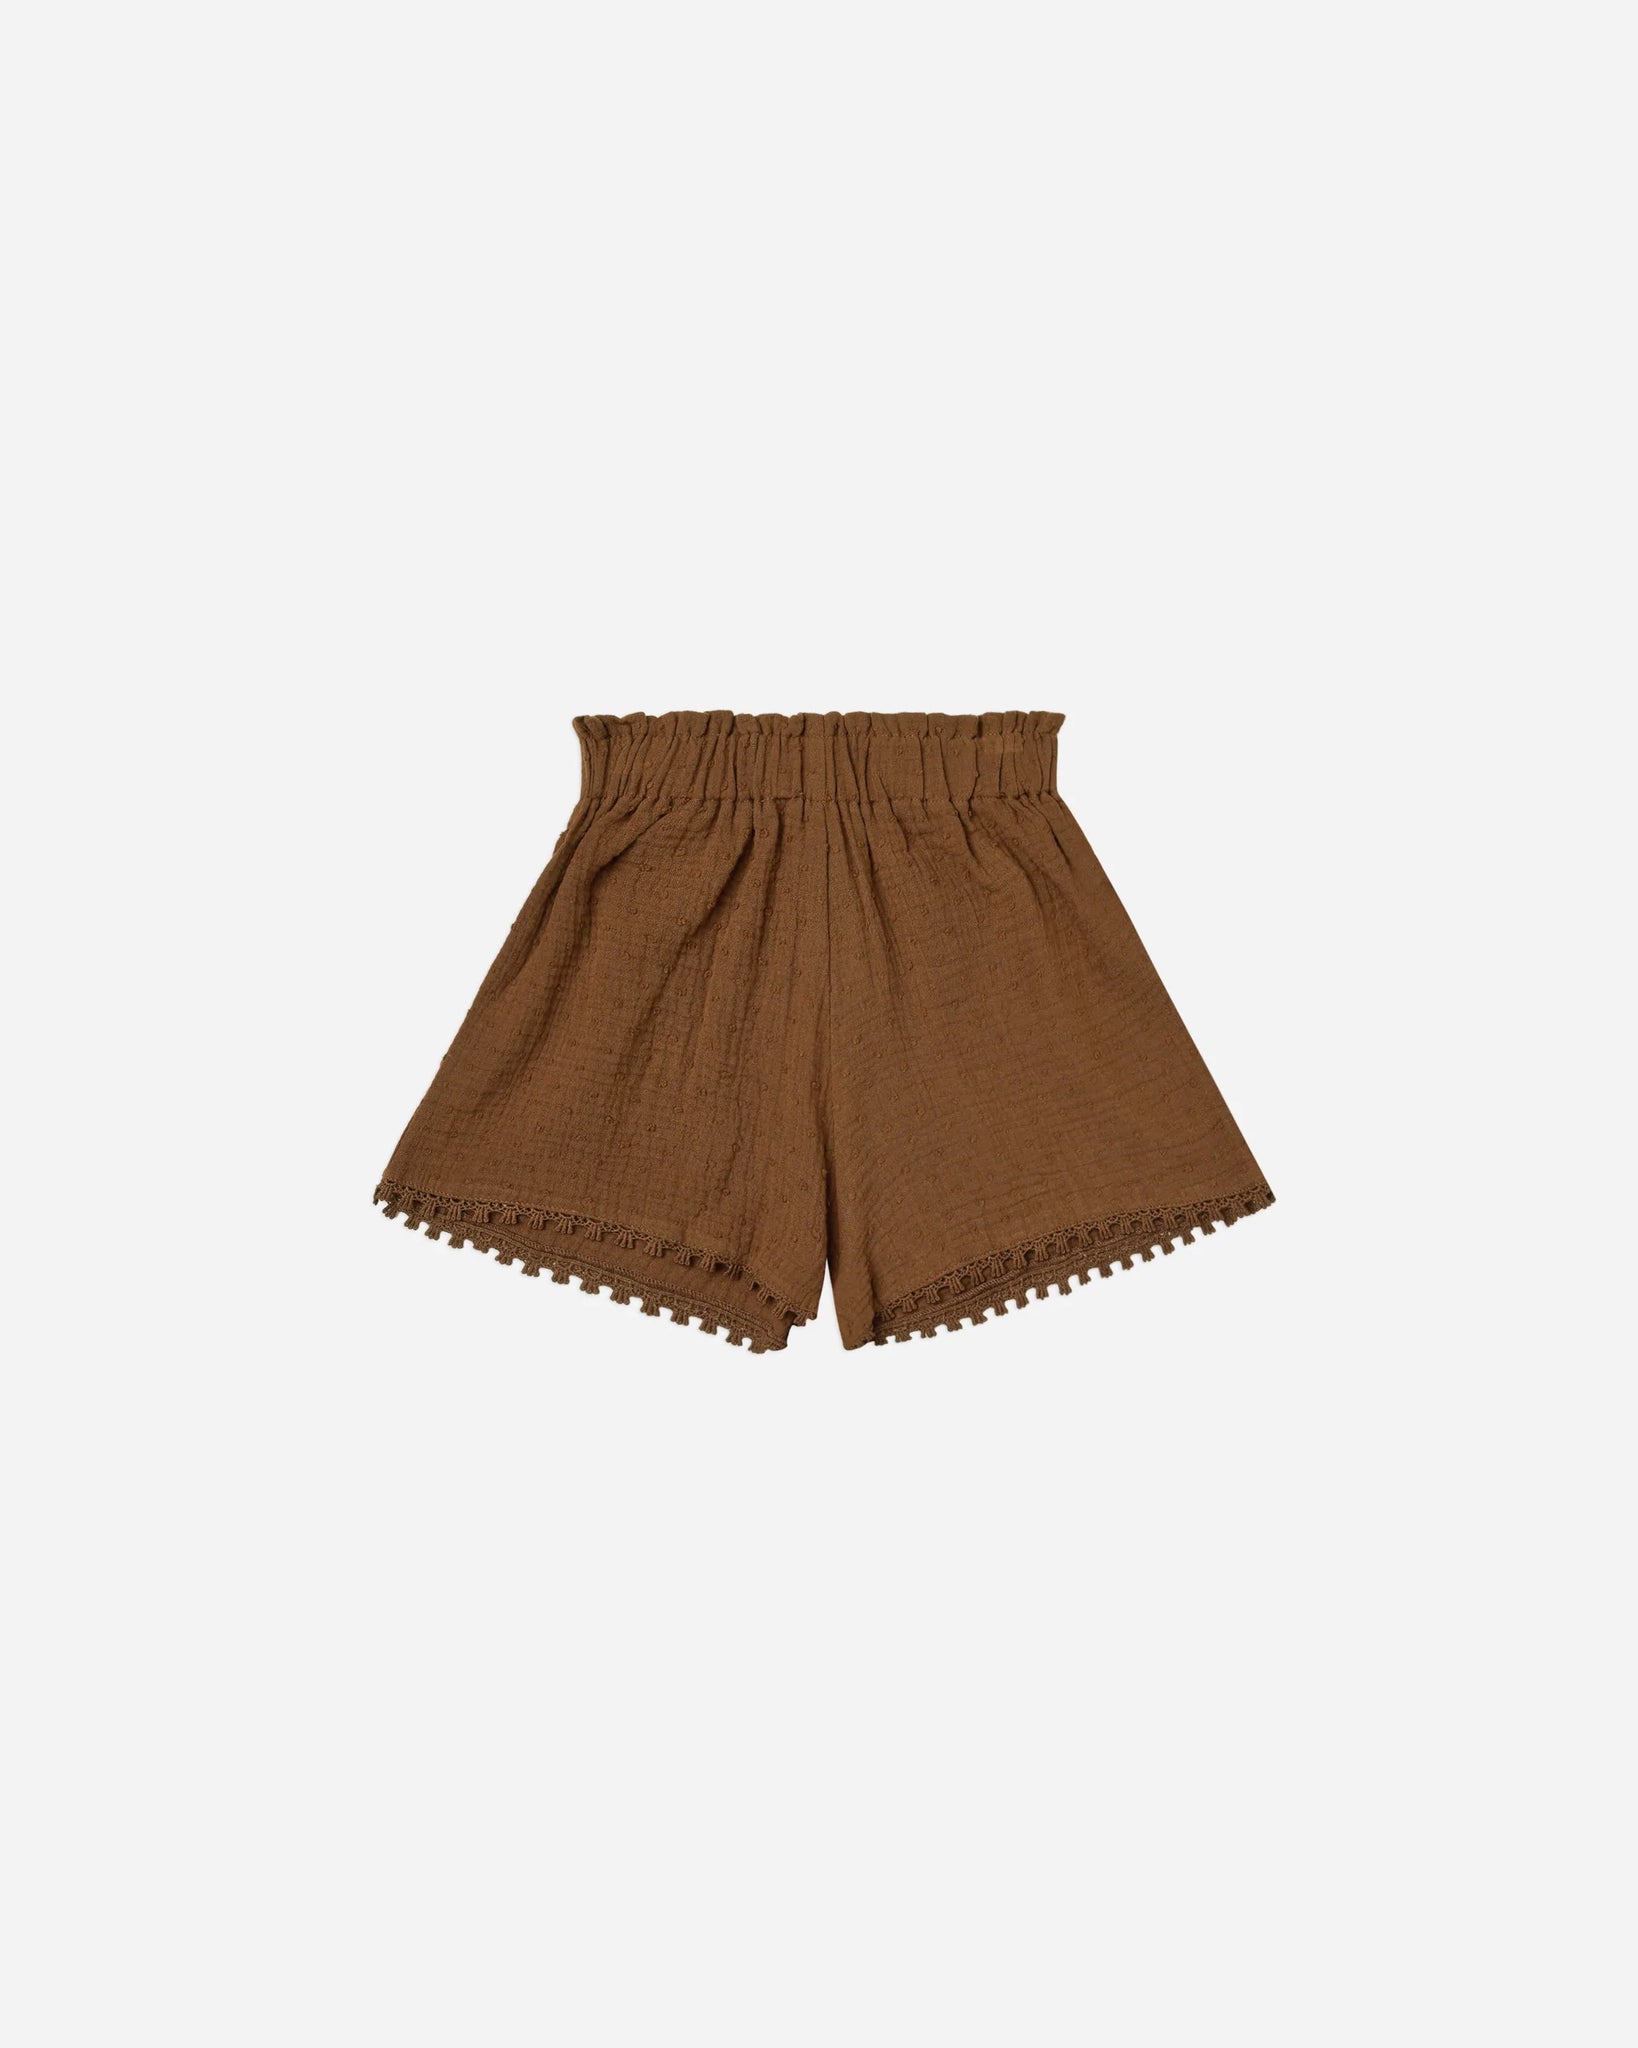 Rylee and Cru remi shorts  "chocolate brown”